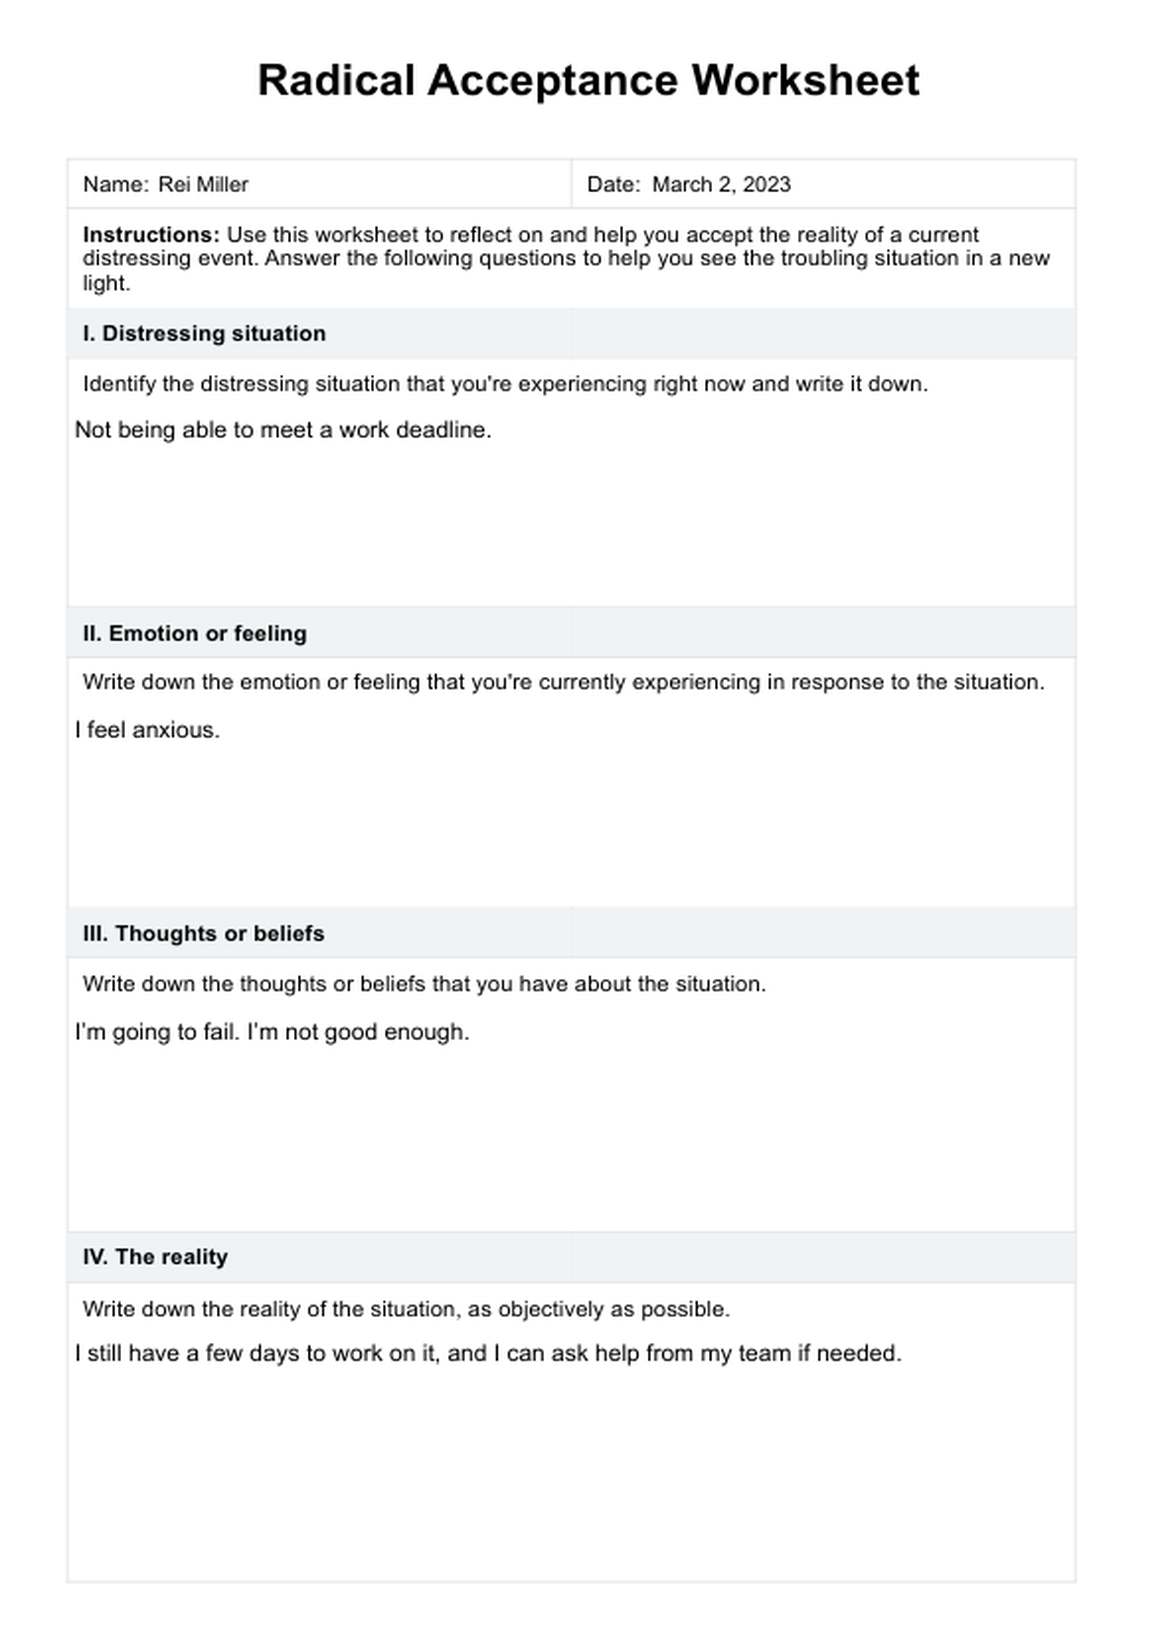 Radical Acceptance Worksheet PDF Example